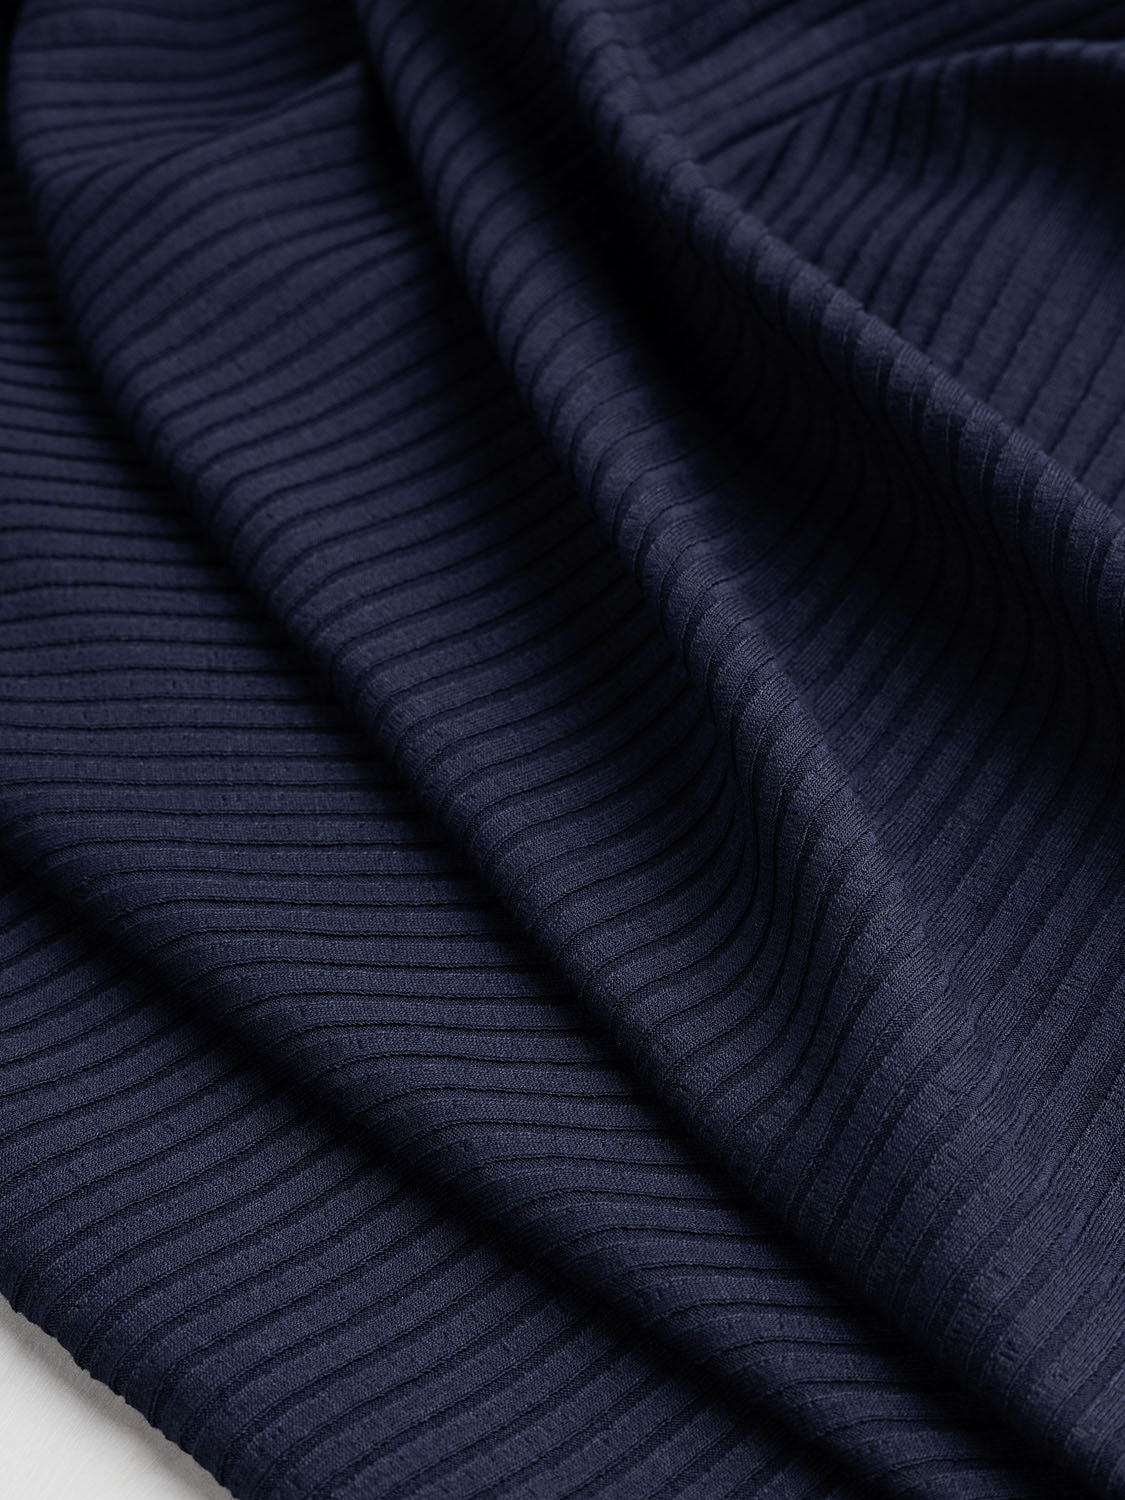 The Versatility and Elegance of Rib Fabrics in Fashion Design